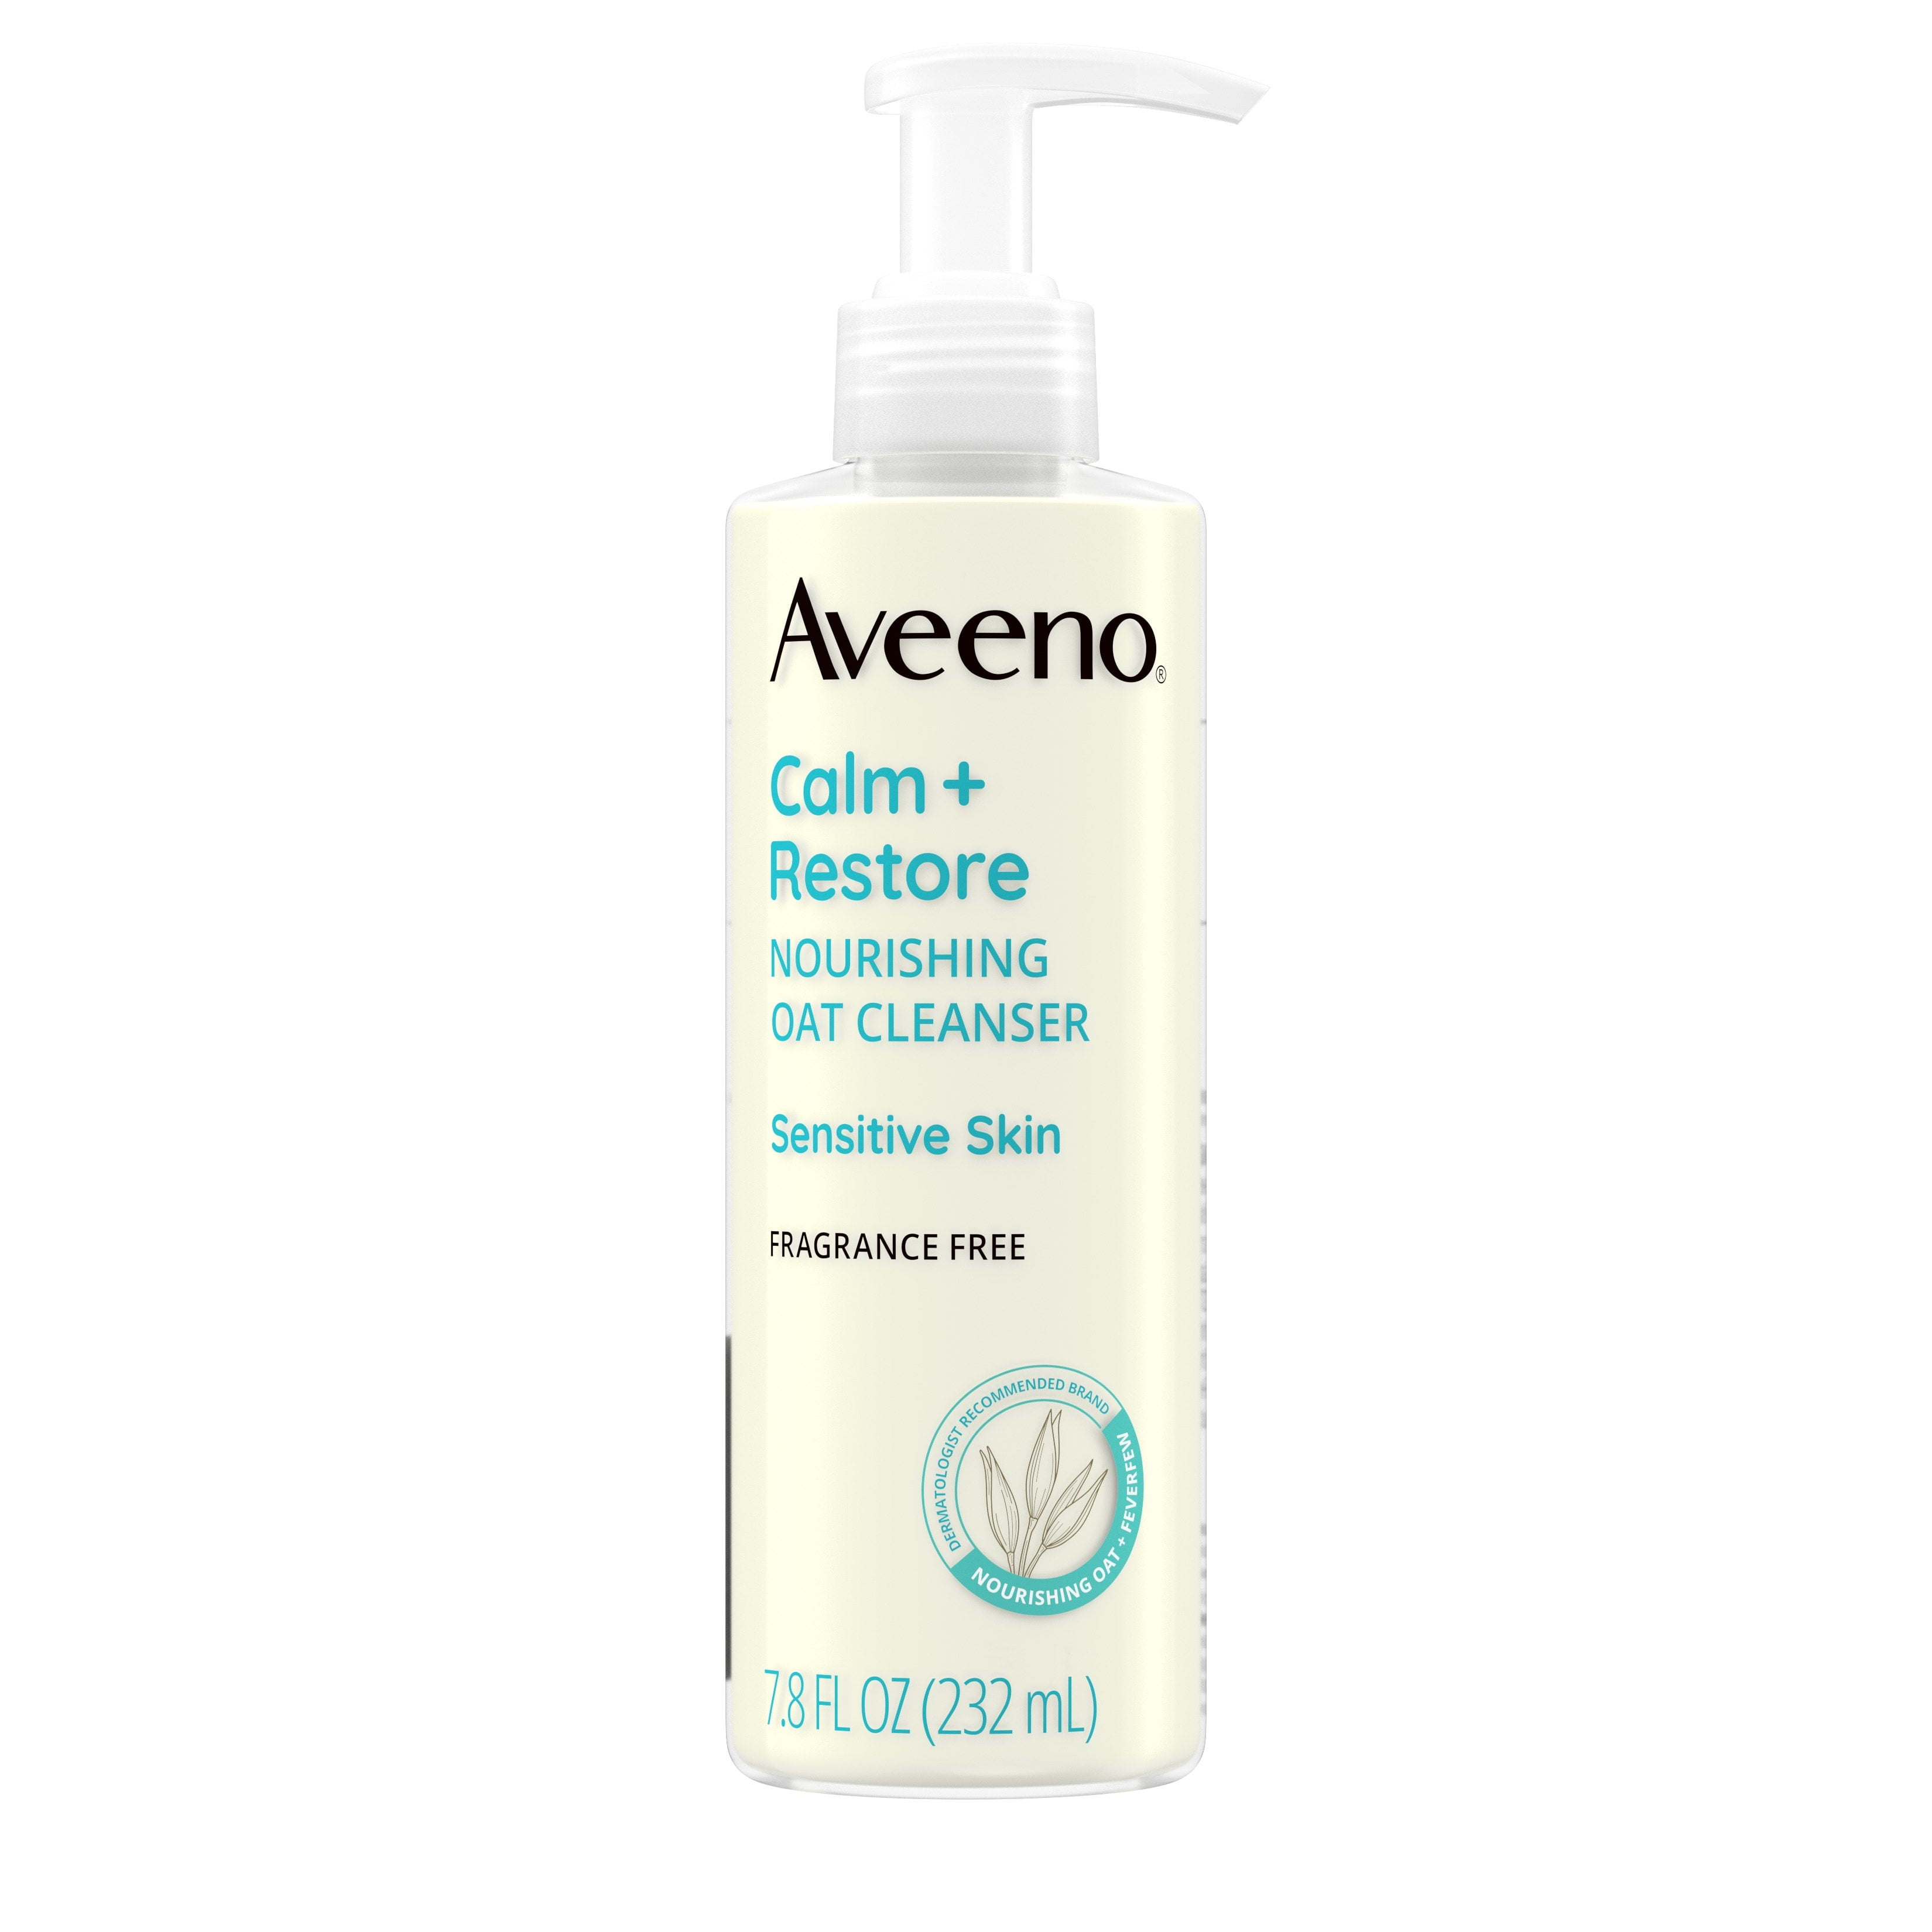 Aveeno Calm + Restore Gentle Nourishing Oat Face Cleanser, 7.8 fl. oz